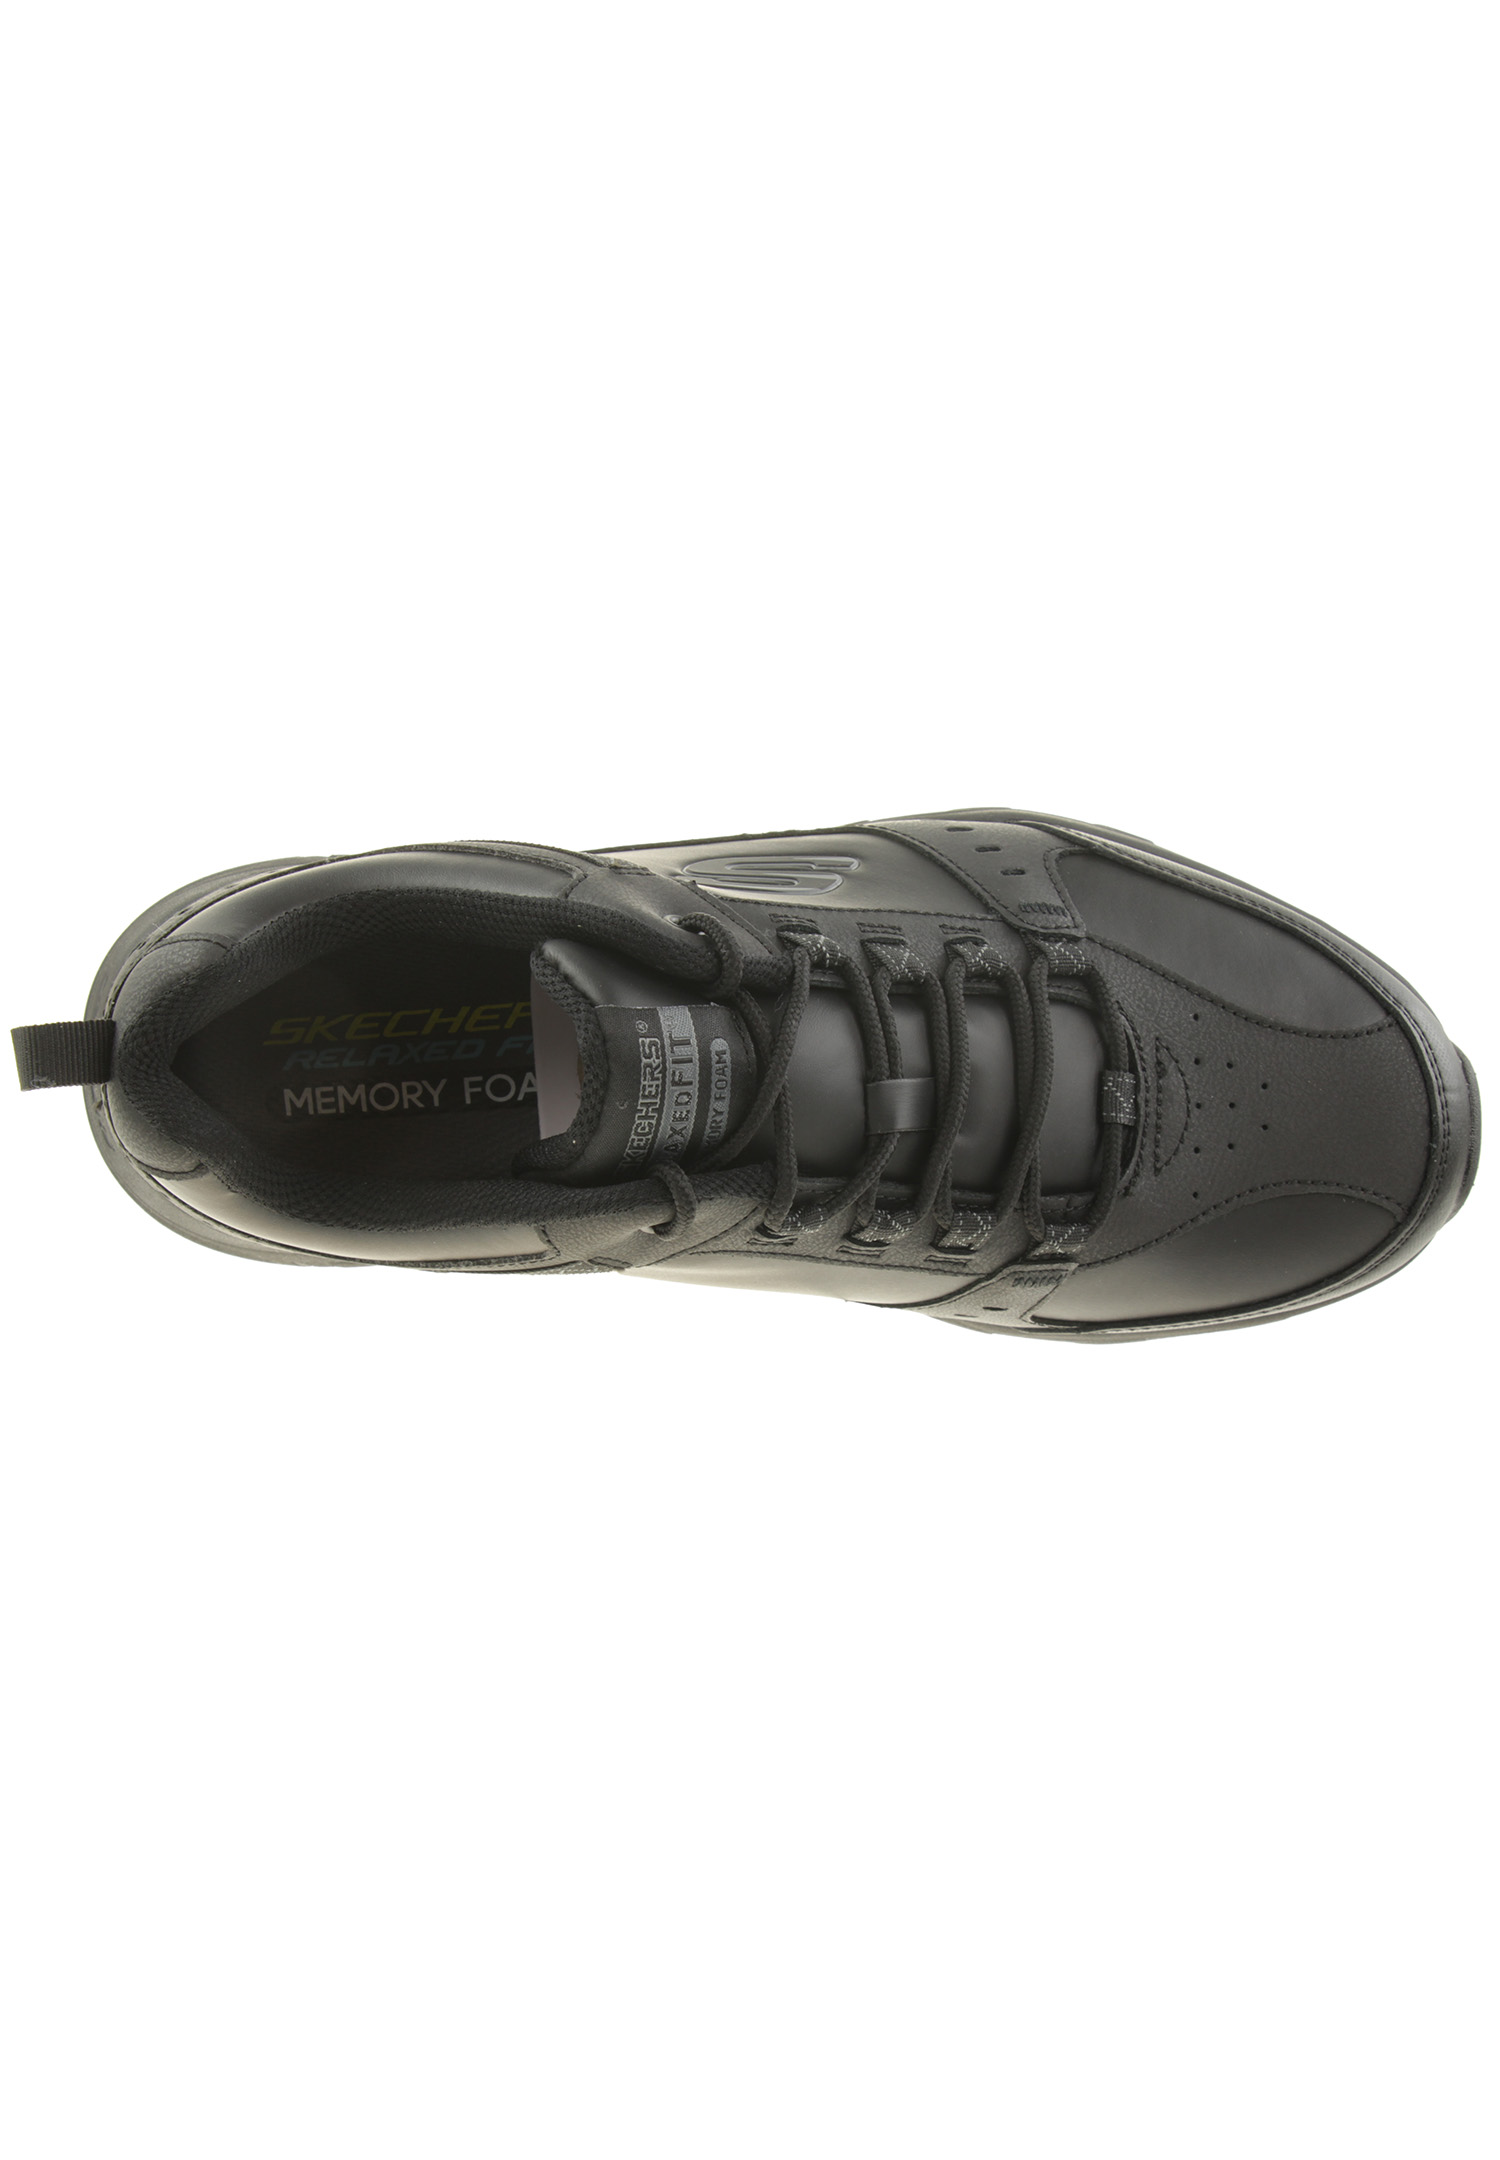 Skechers Outdoor Oak Canyon - REDWICK Herren Sneaker 51896 BBK schwarz